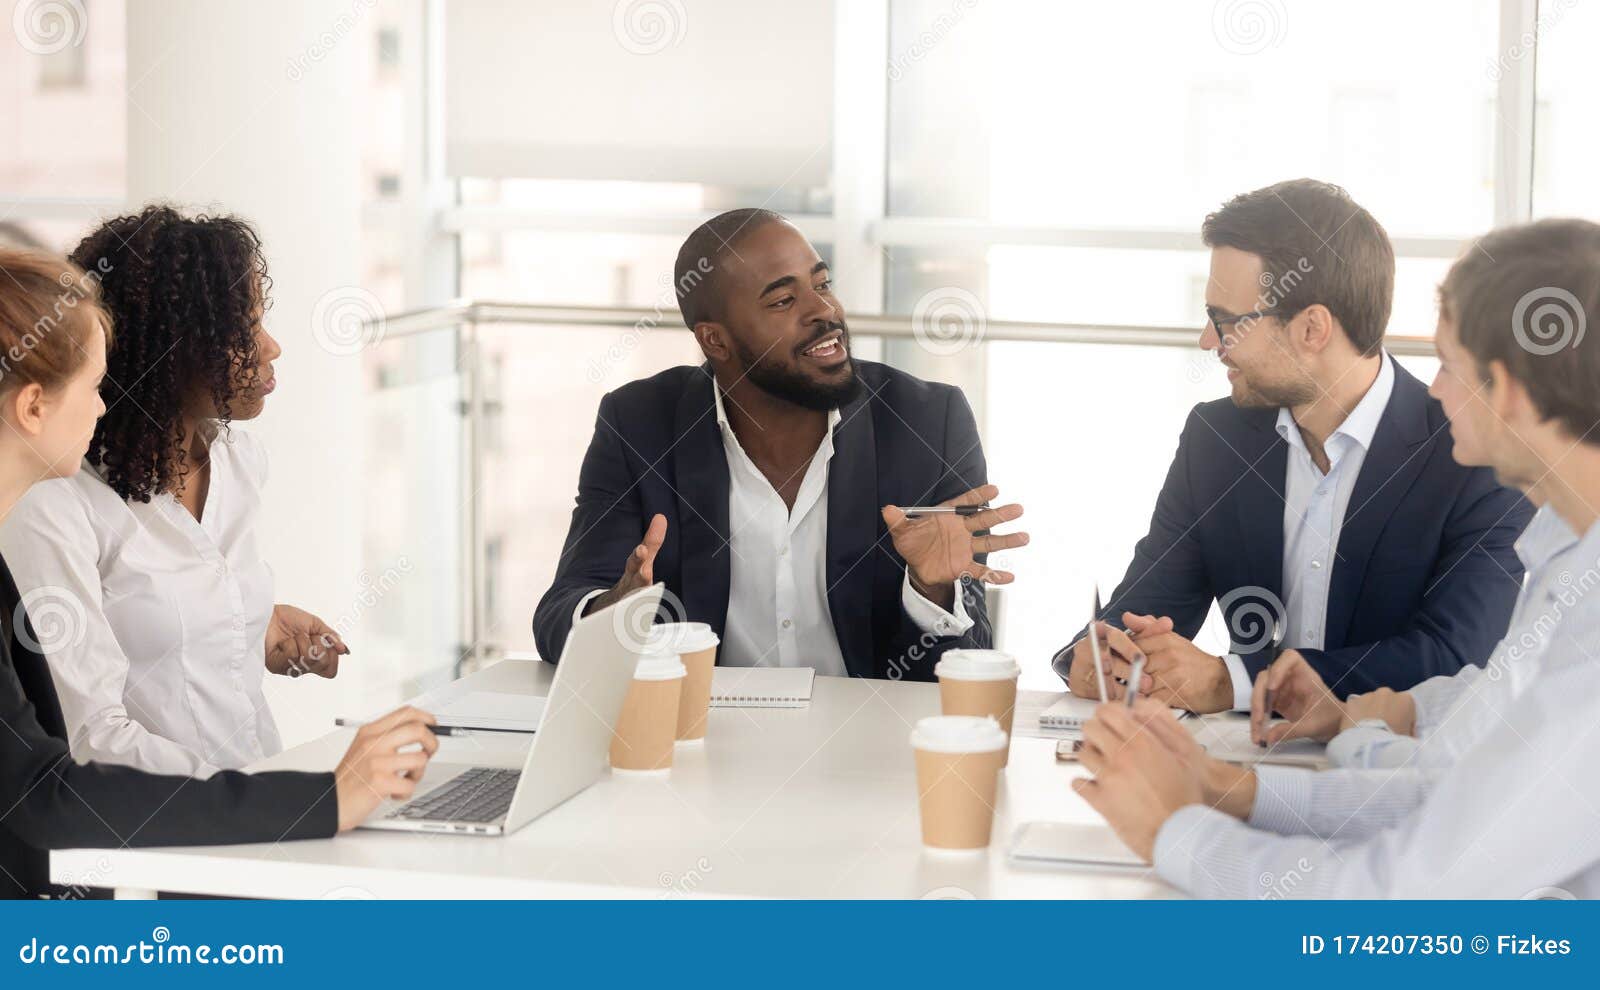 black male boss leading corporate in team meeting